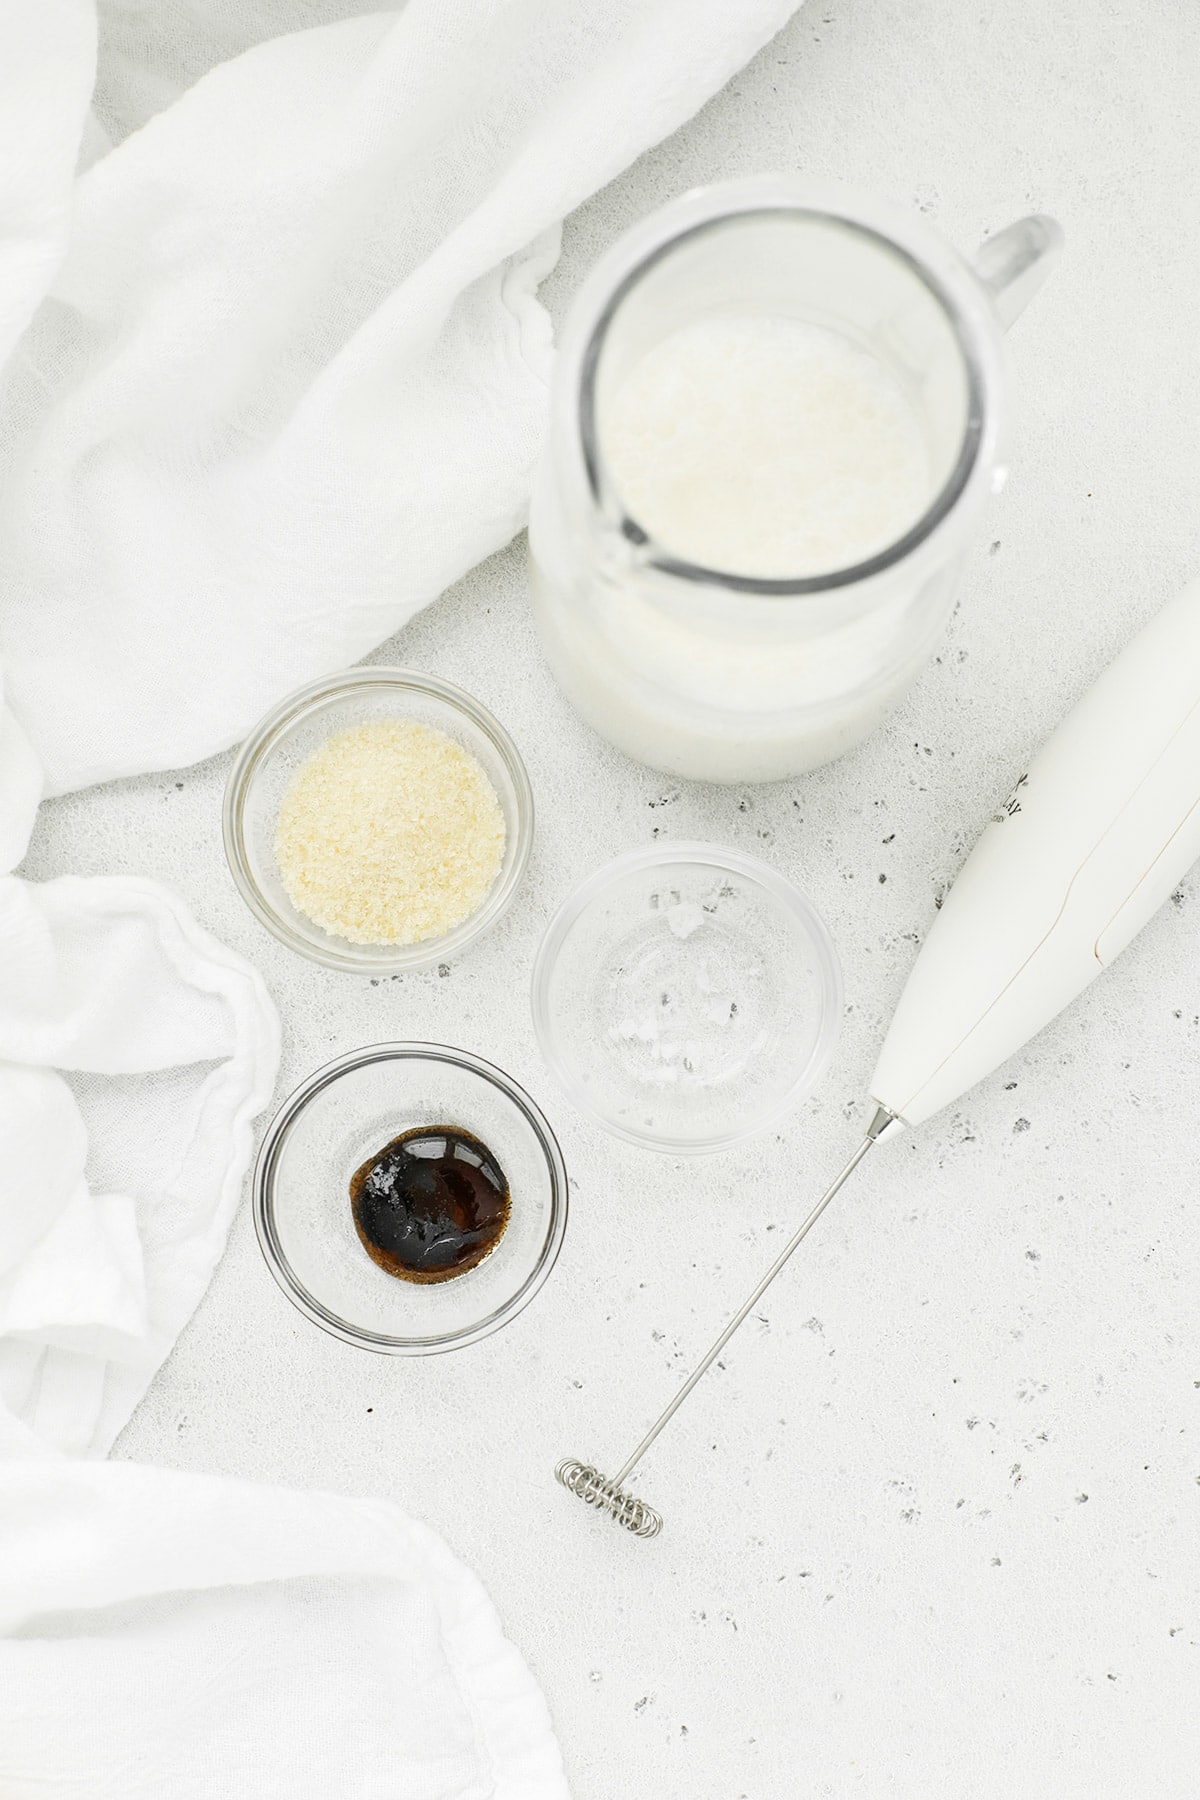 Ingredients for vanilla steamer starbucks drink copycat